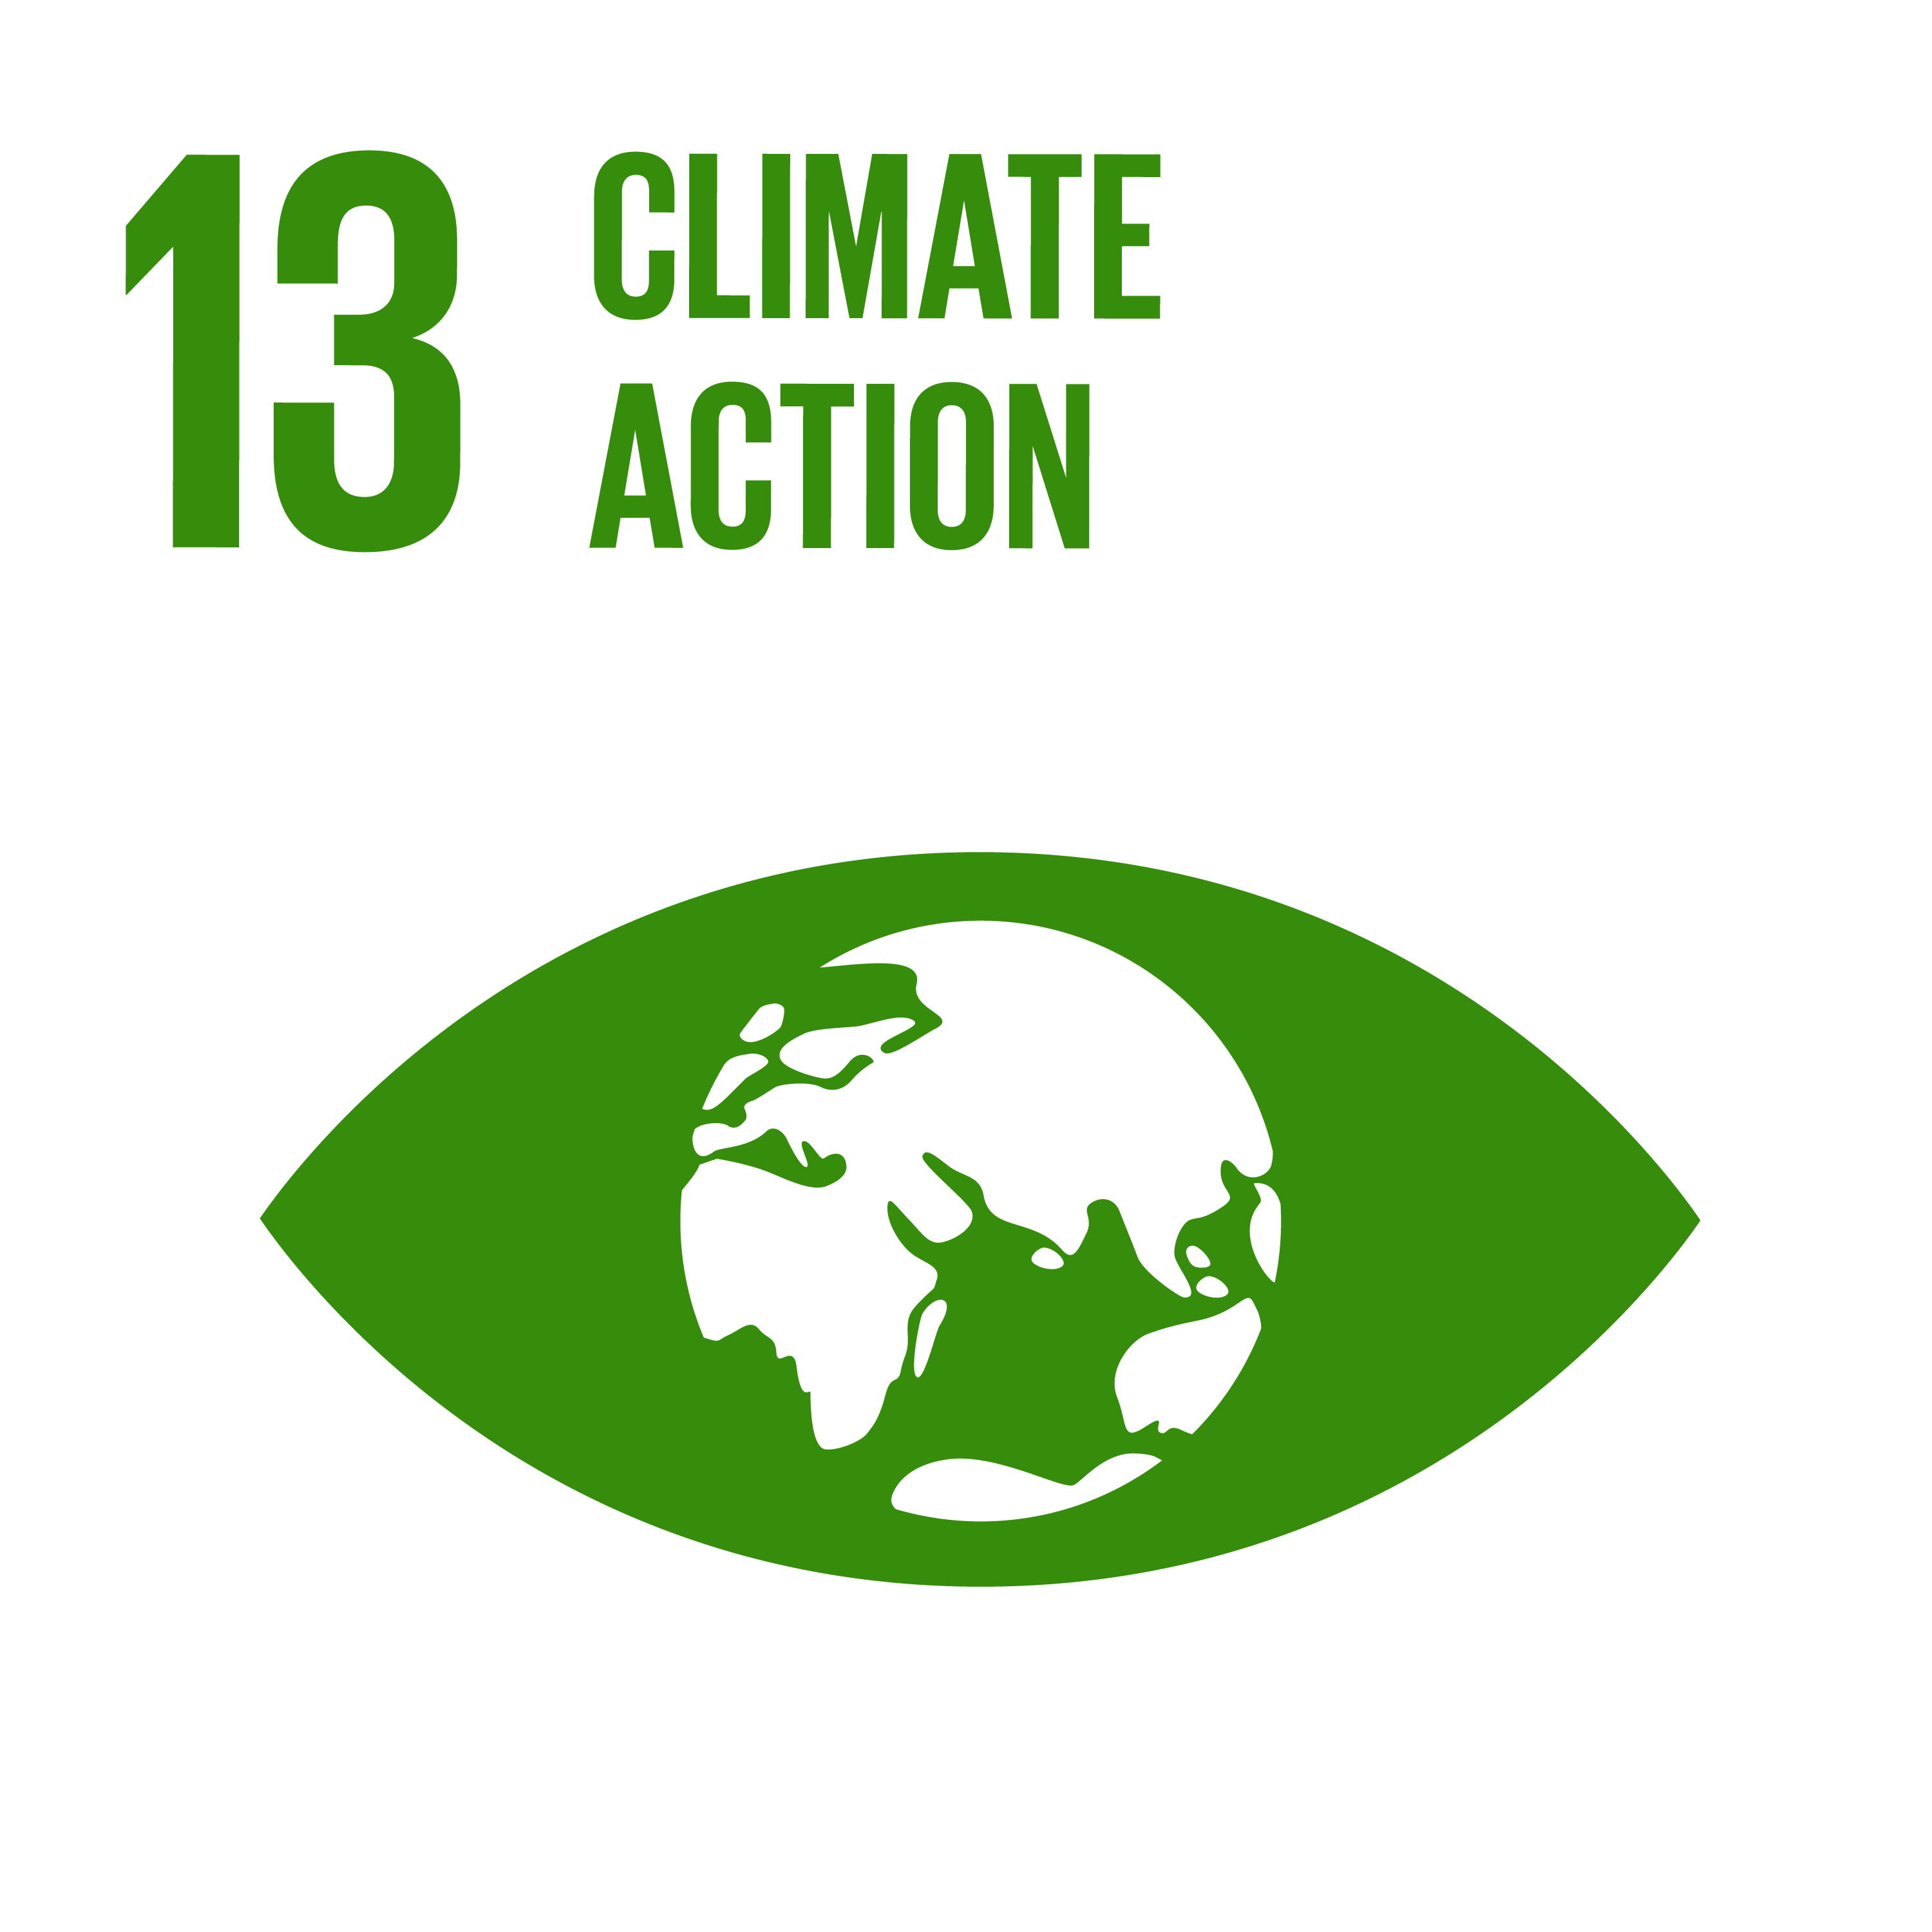 Sustainable development goals: Climate action